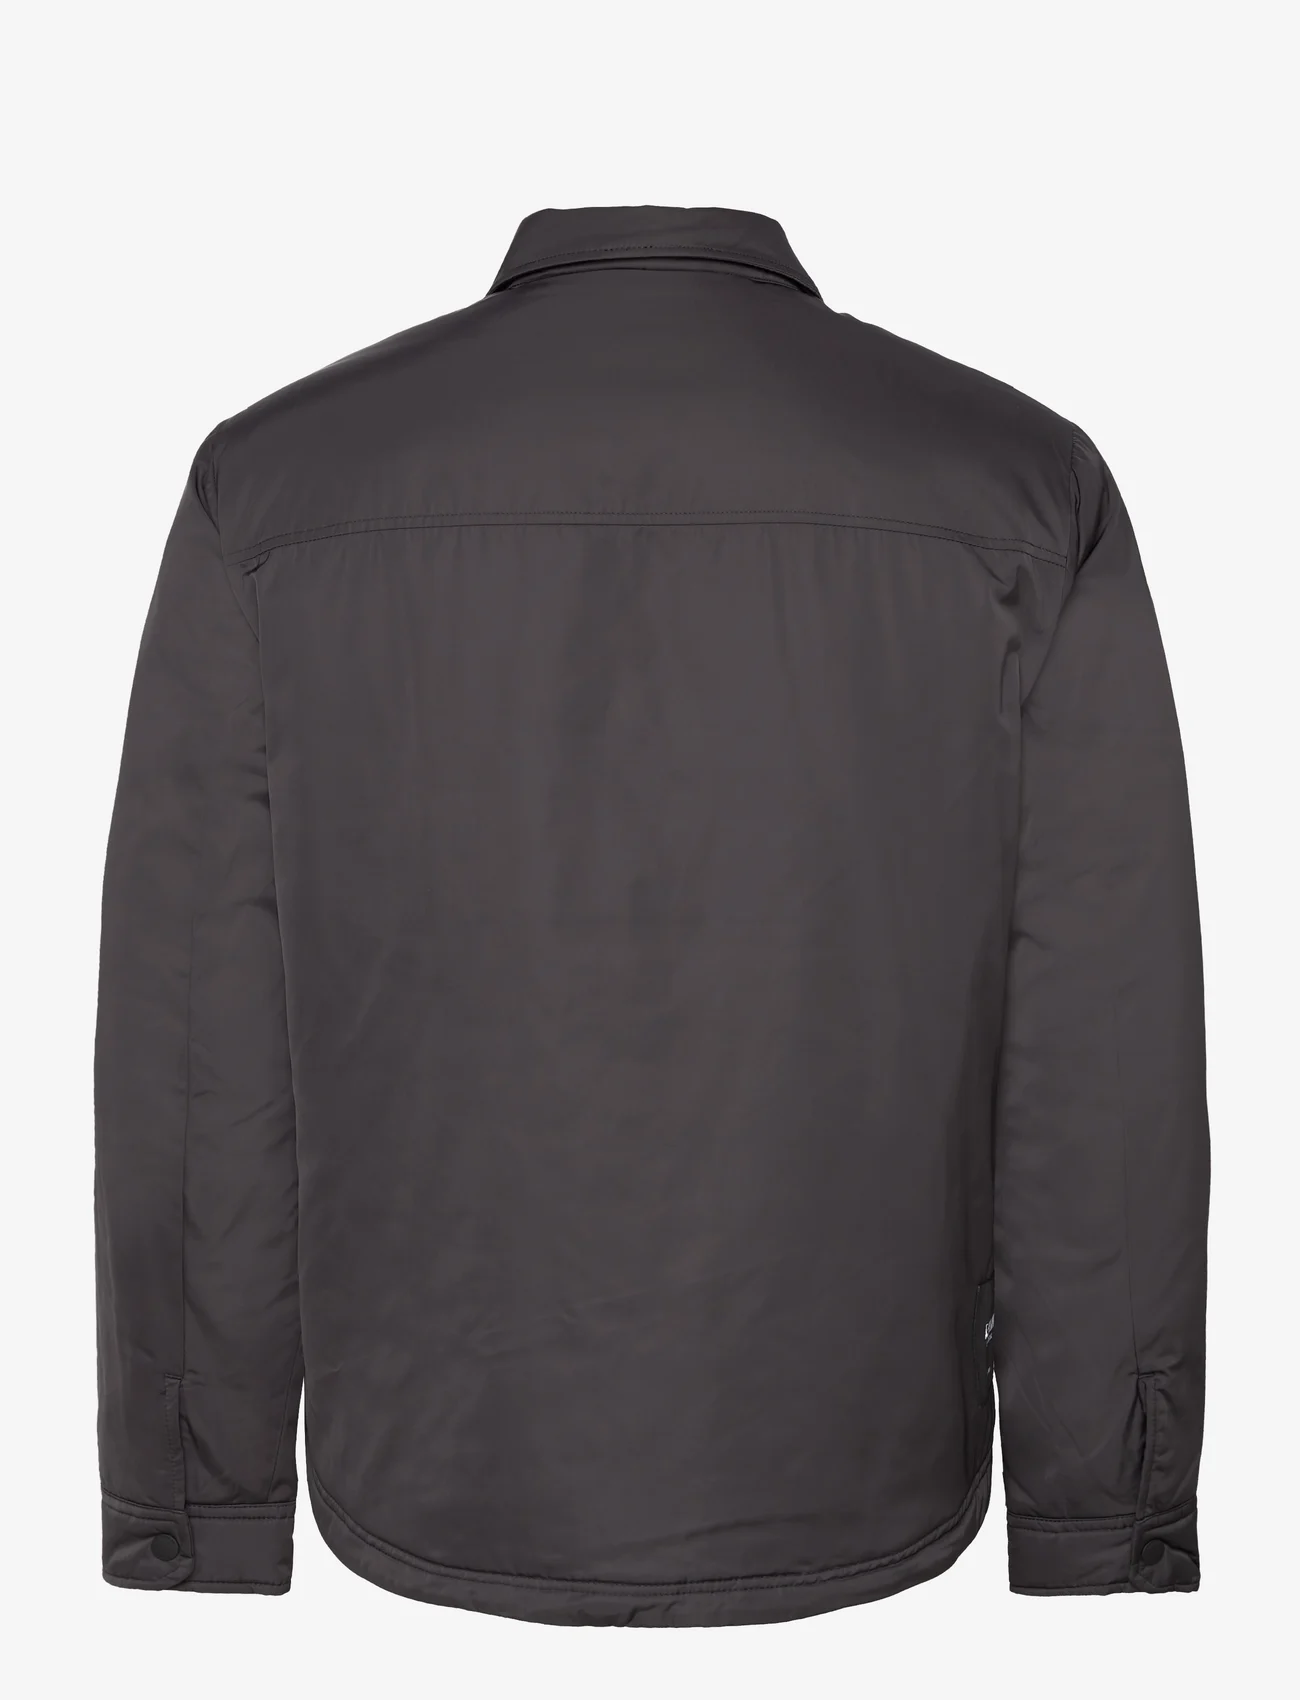 Replay - Jacket REGULAR Essential - vårjakker - black - 1